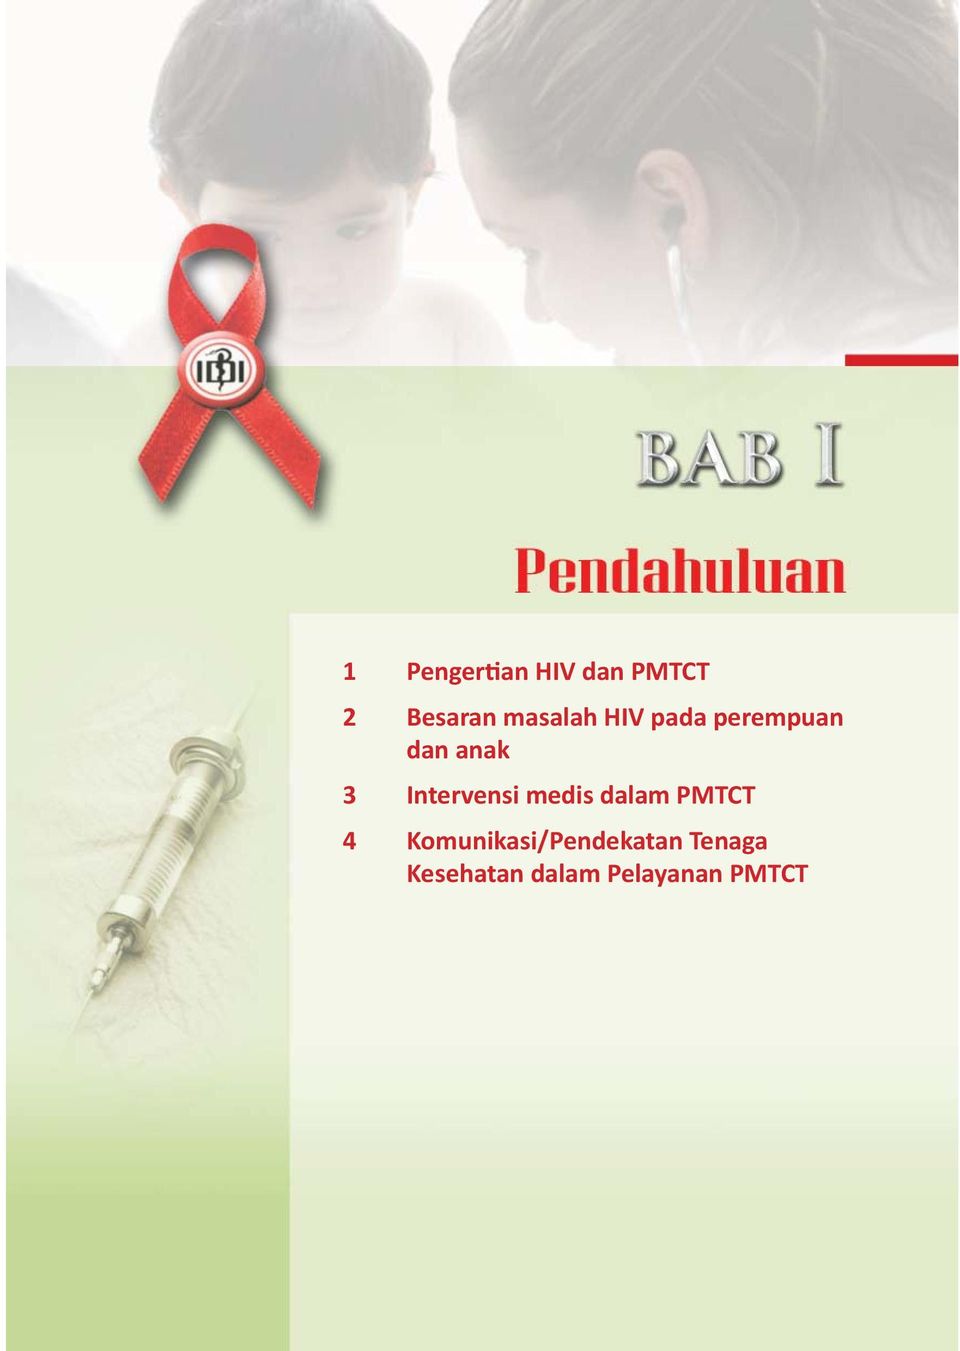 Intervensi medis dalam PMTCT 4